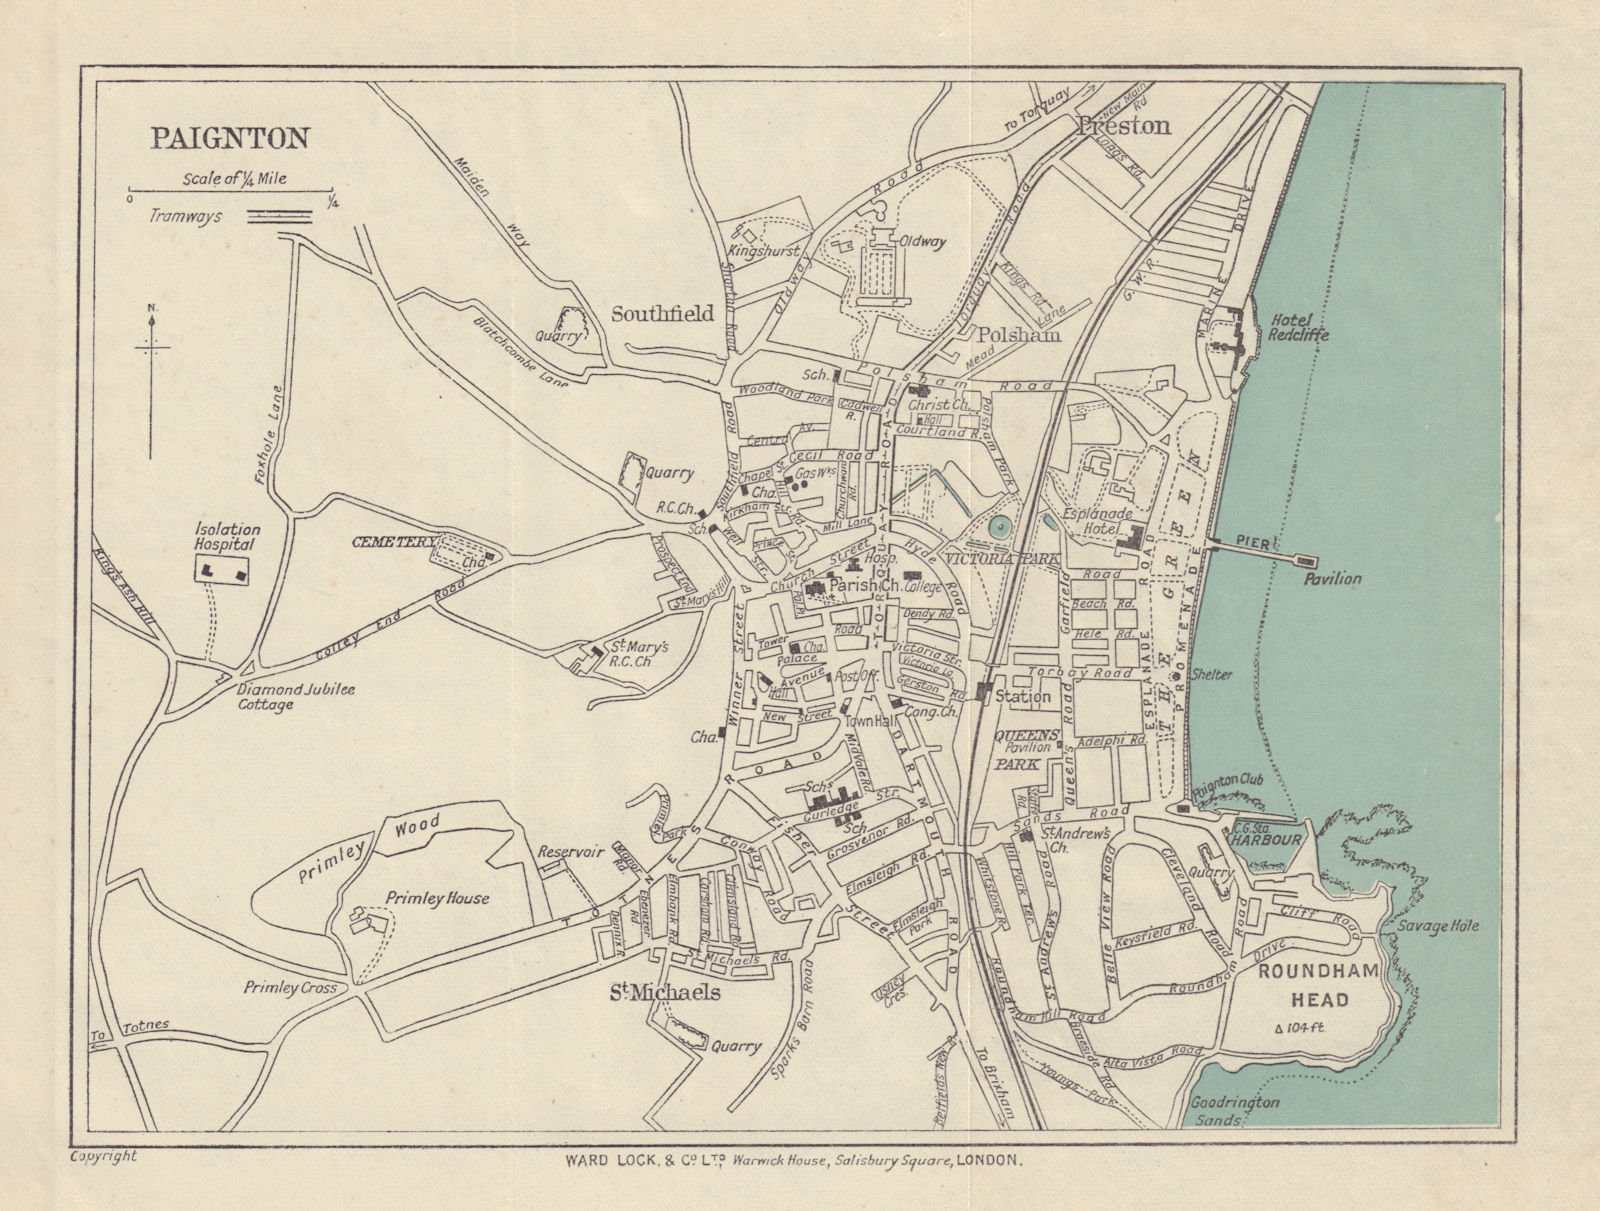 Associate Product PAIGNTON vintage town/city plan. Devon. Roundham Head. WARD LOCK 1921 old map